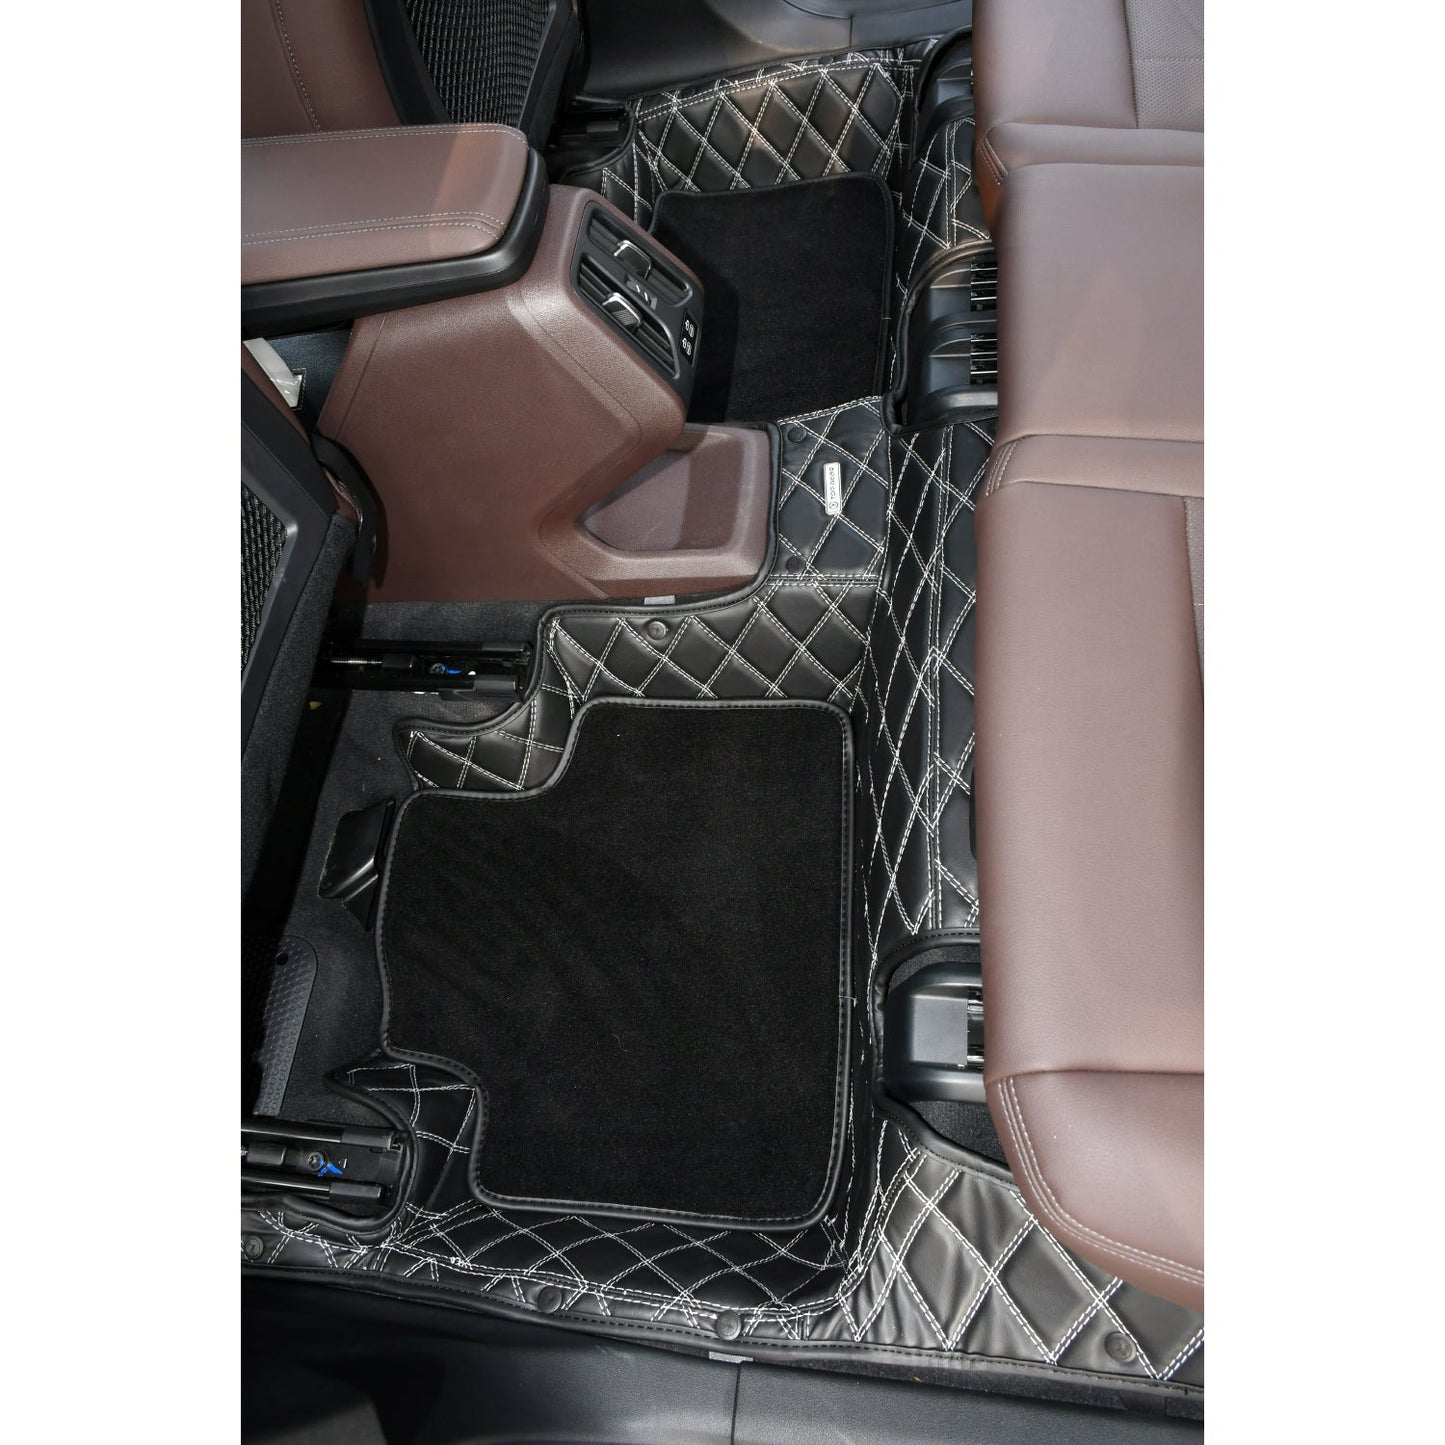 
                  
                    Top Gear 4D Pristine Coral Leatherite Car Mats for BMW X1 III-Crown Black(UM-Charcoal)-7D MATS-TOP GEAR-CARPLUS
                  
                